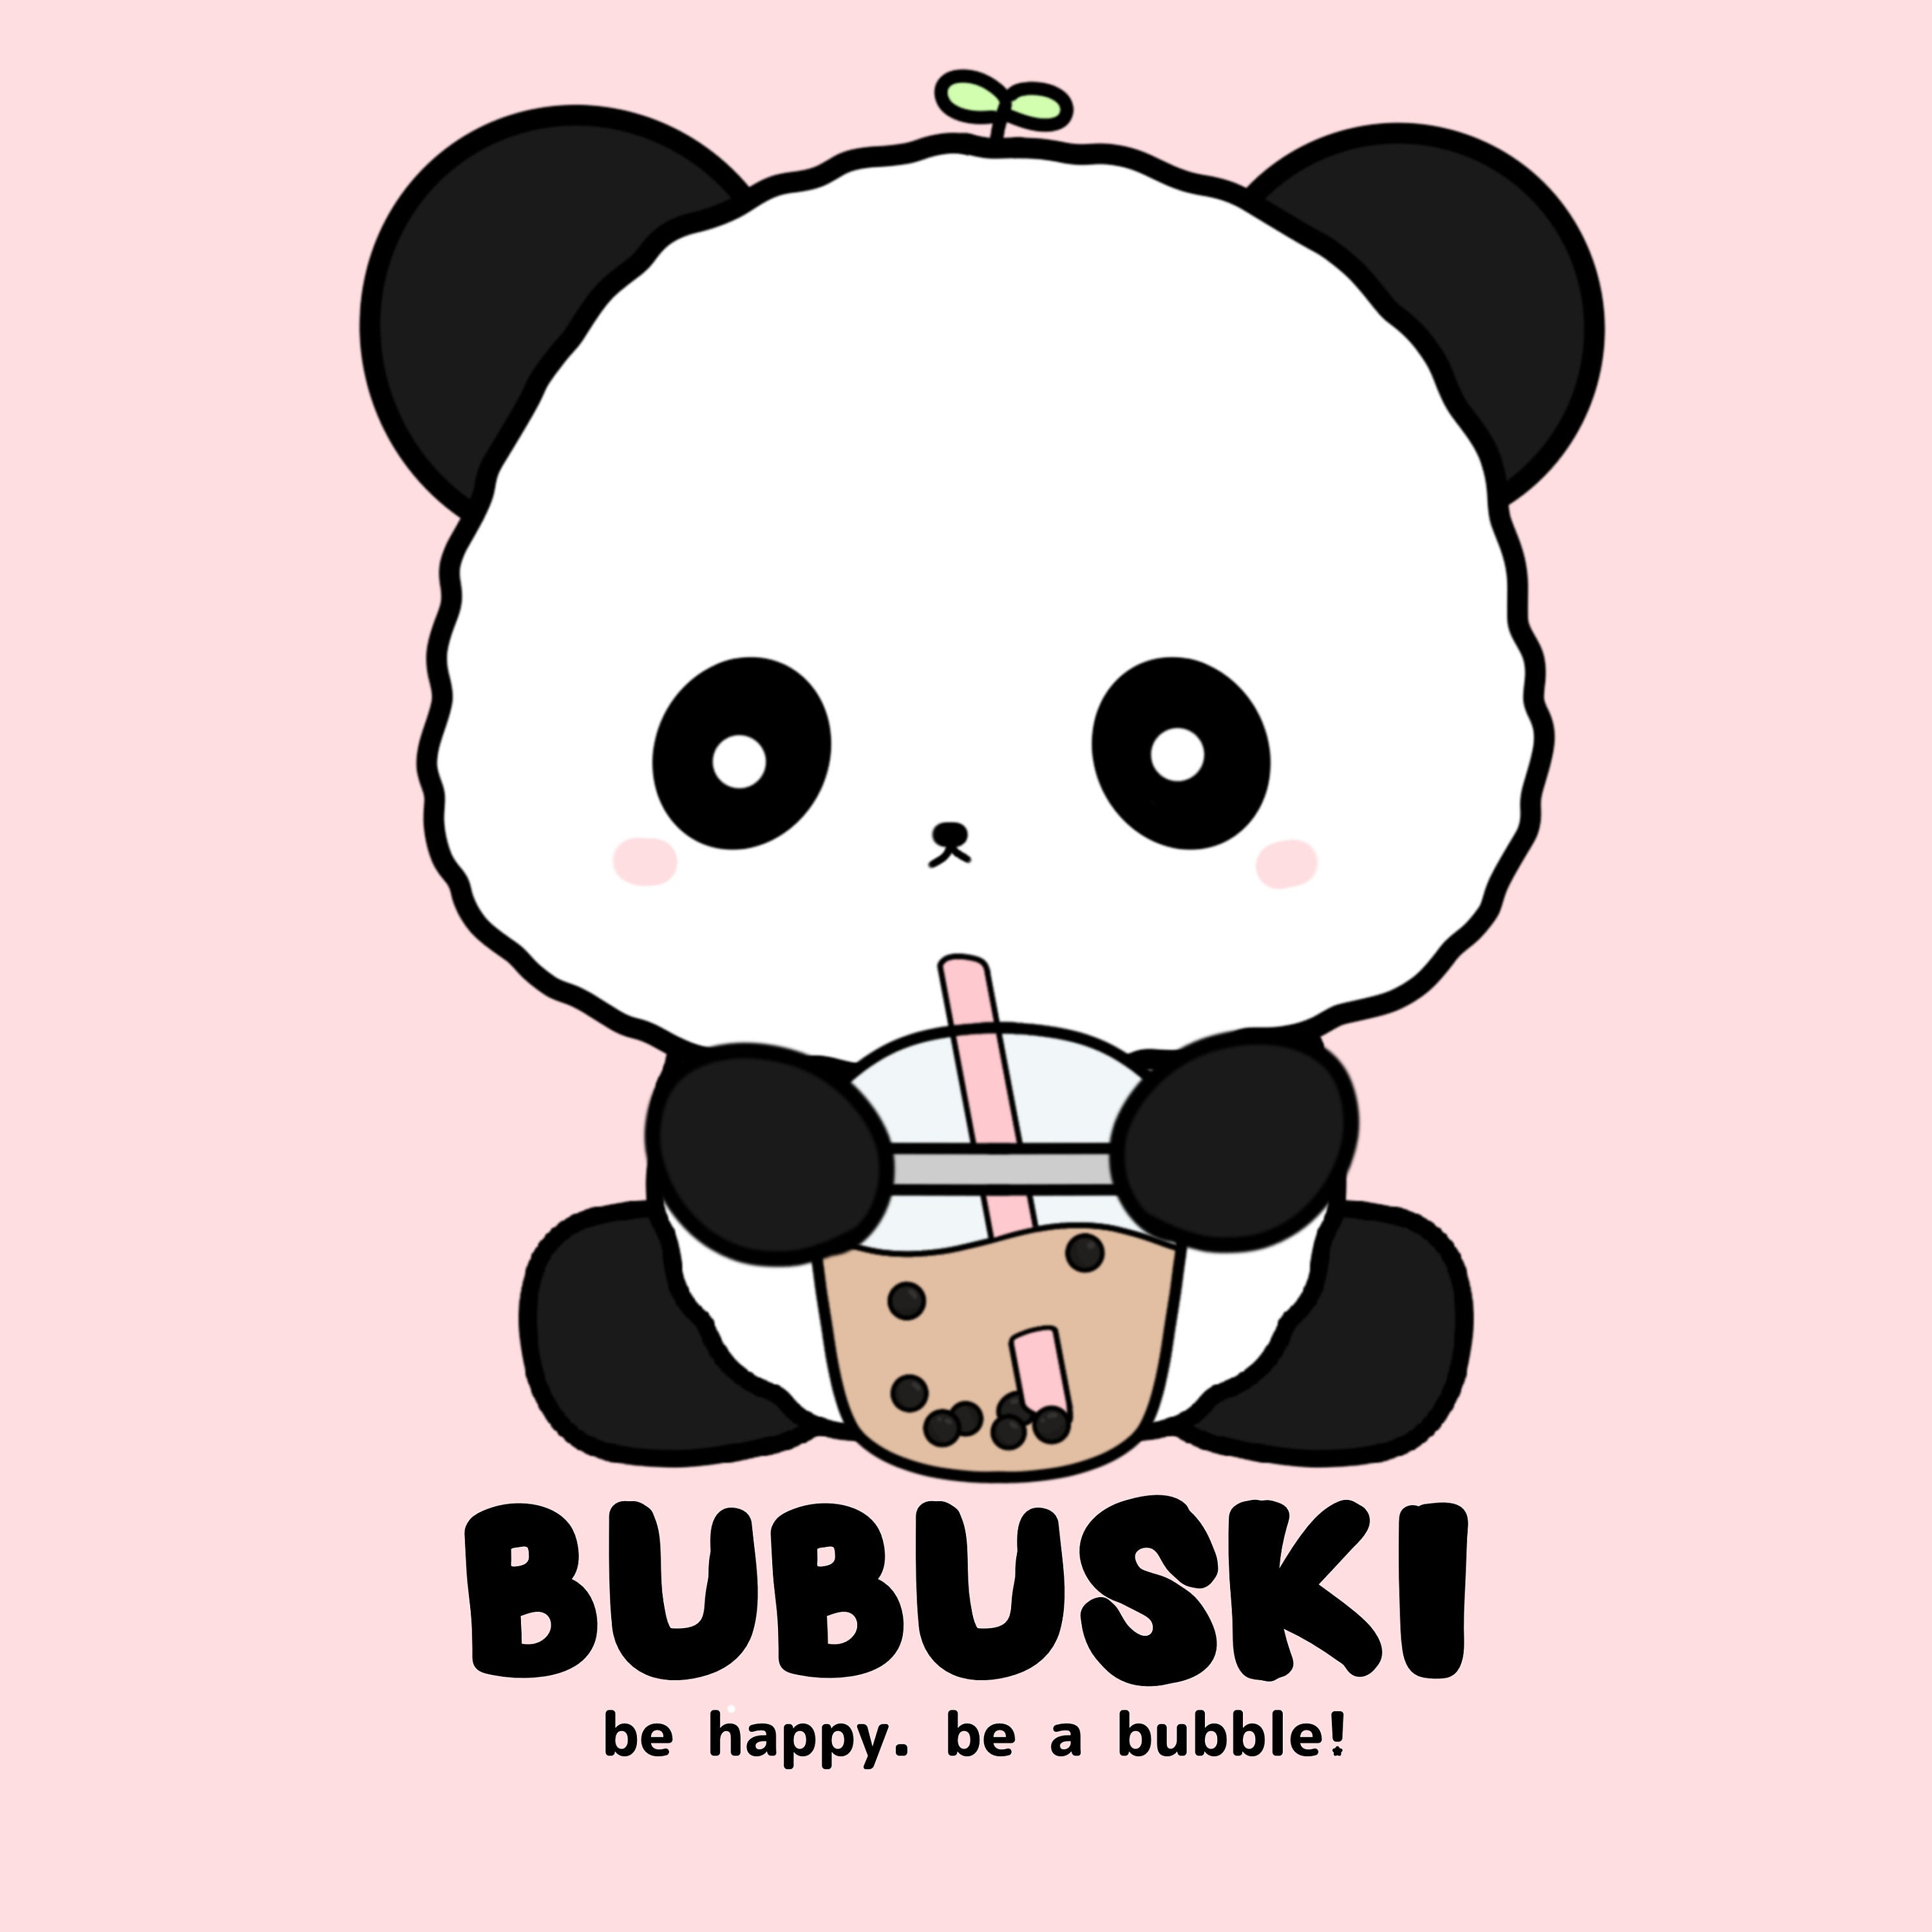 Cute Boba Sticker Bubuski Kawaii Panda Cute Bubble Milk